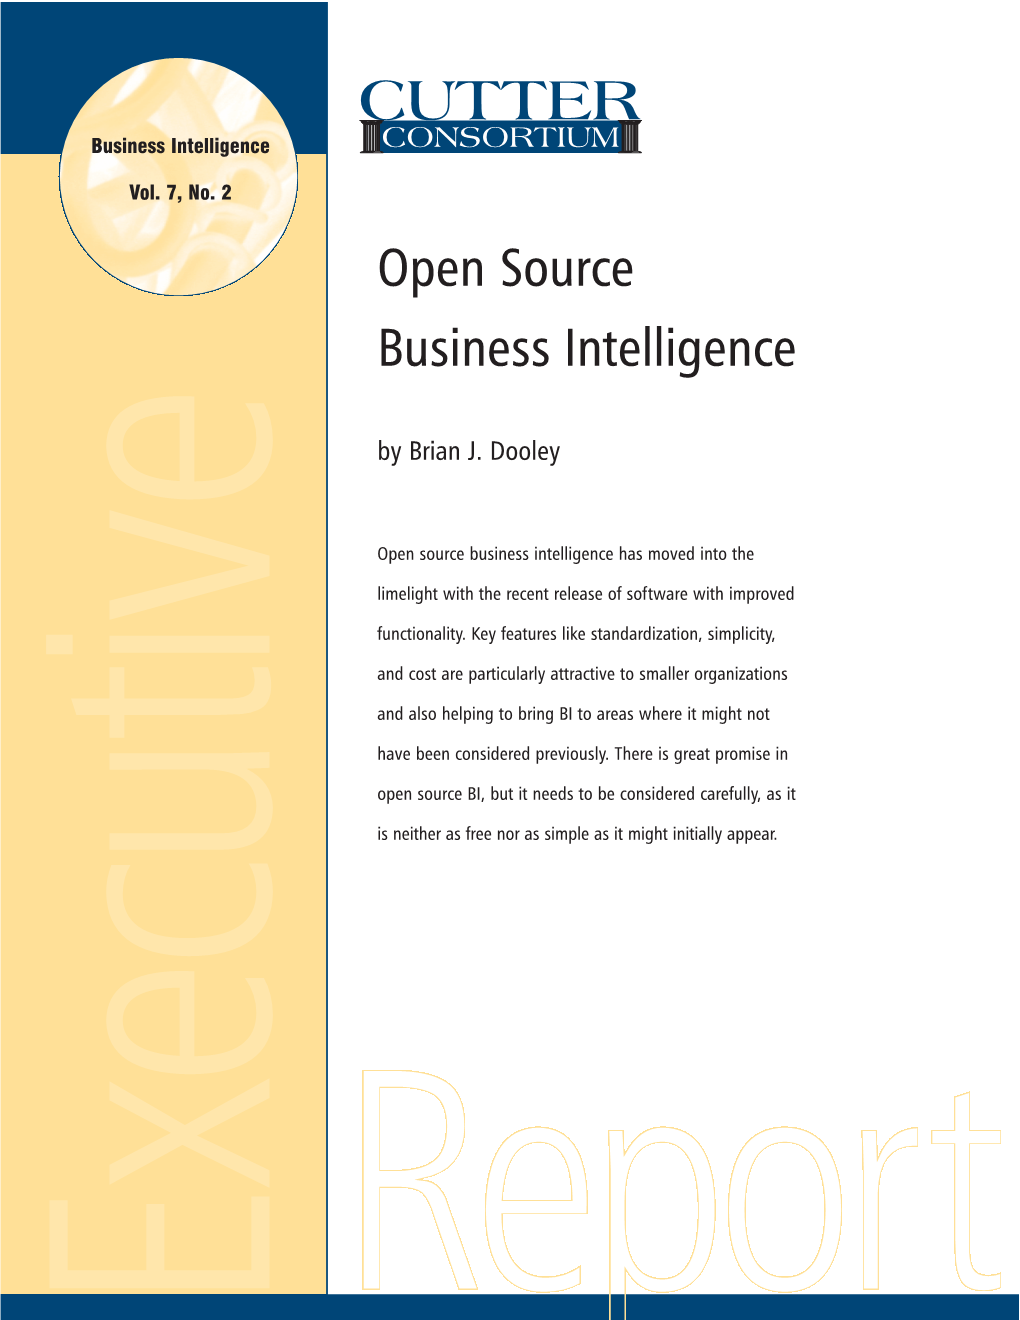 Open Source Business Intelligence